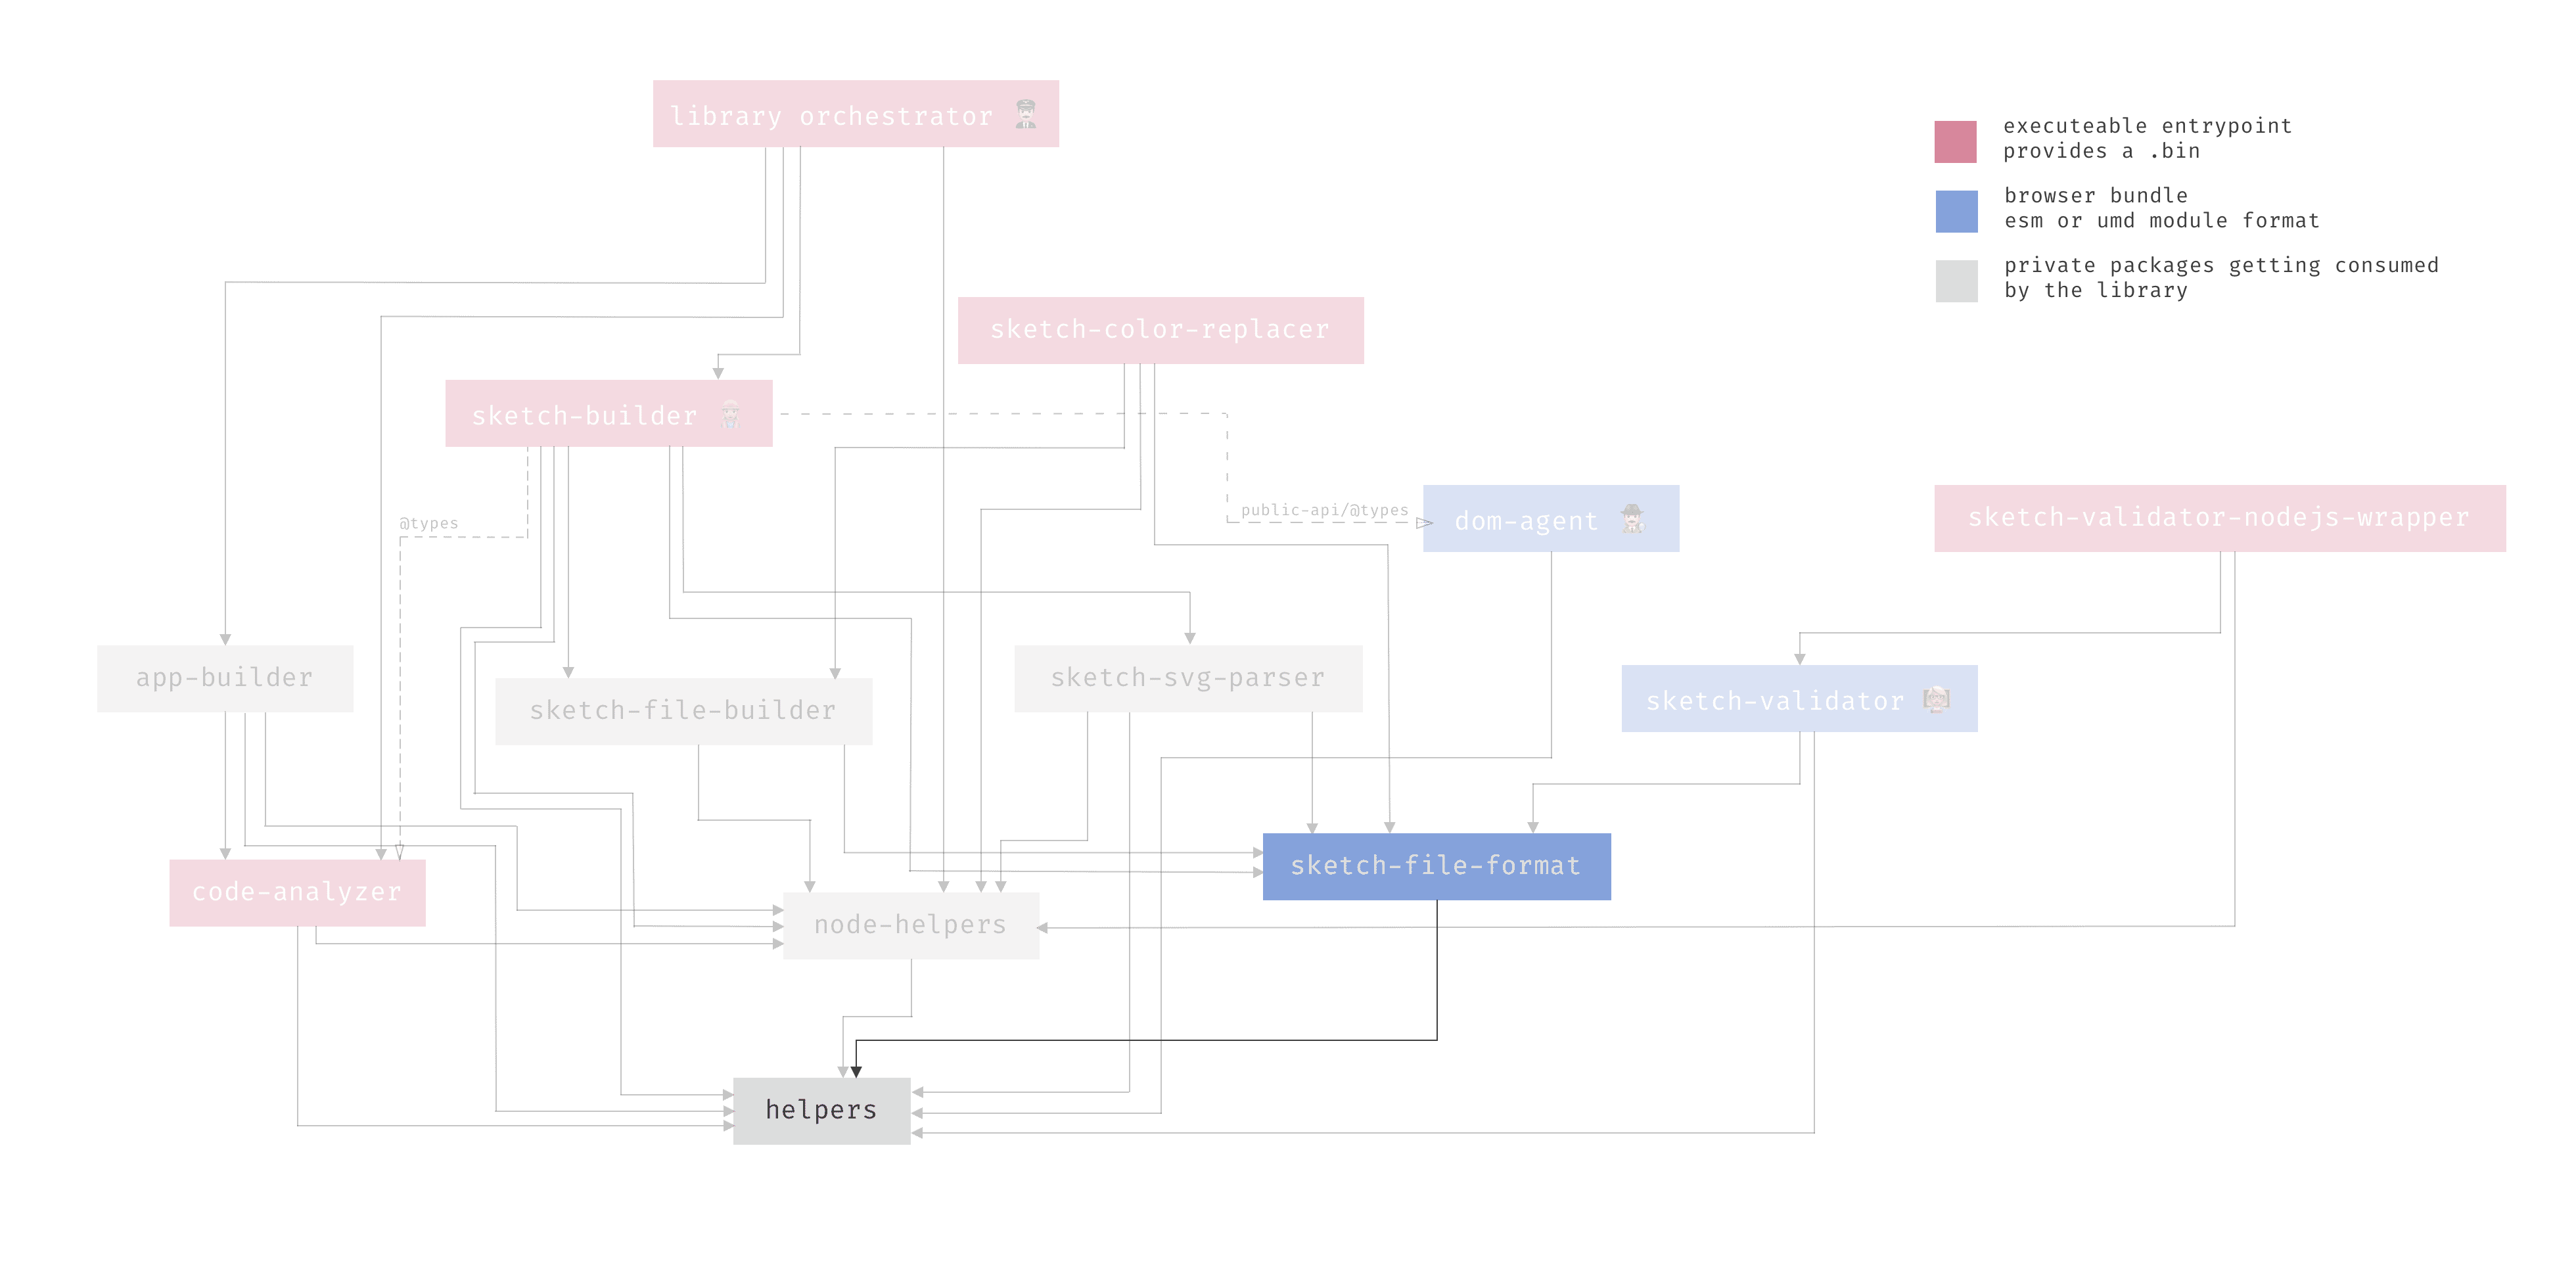 Dependency graph of the sketchmine sketch-file-format